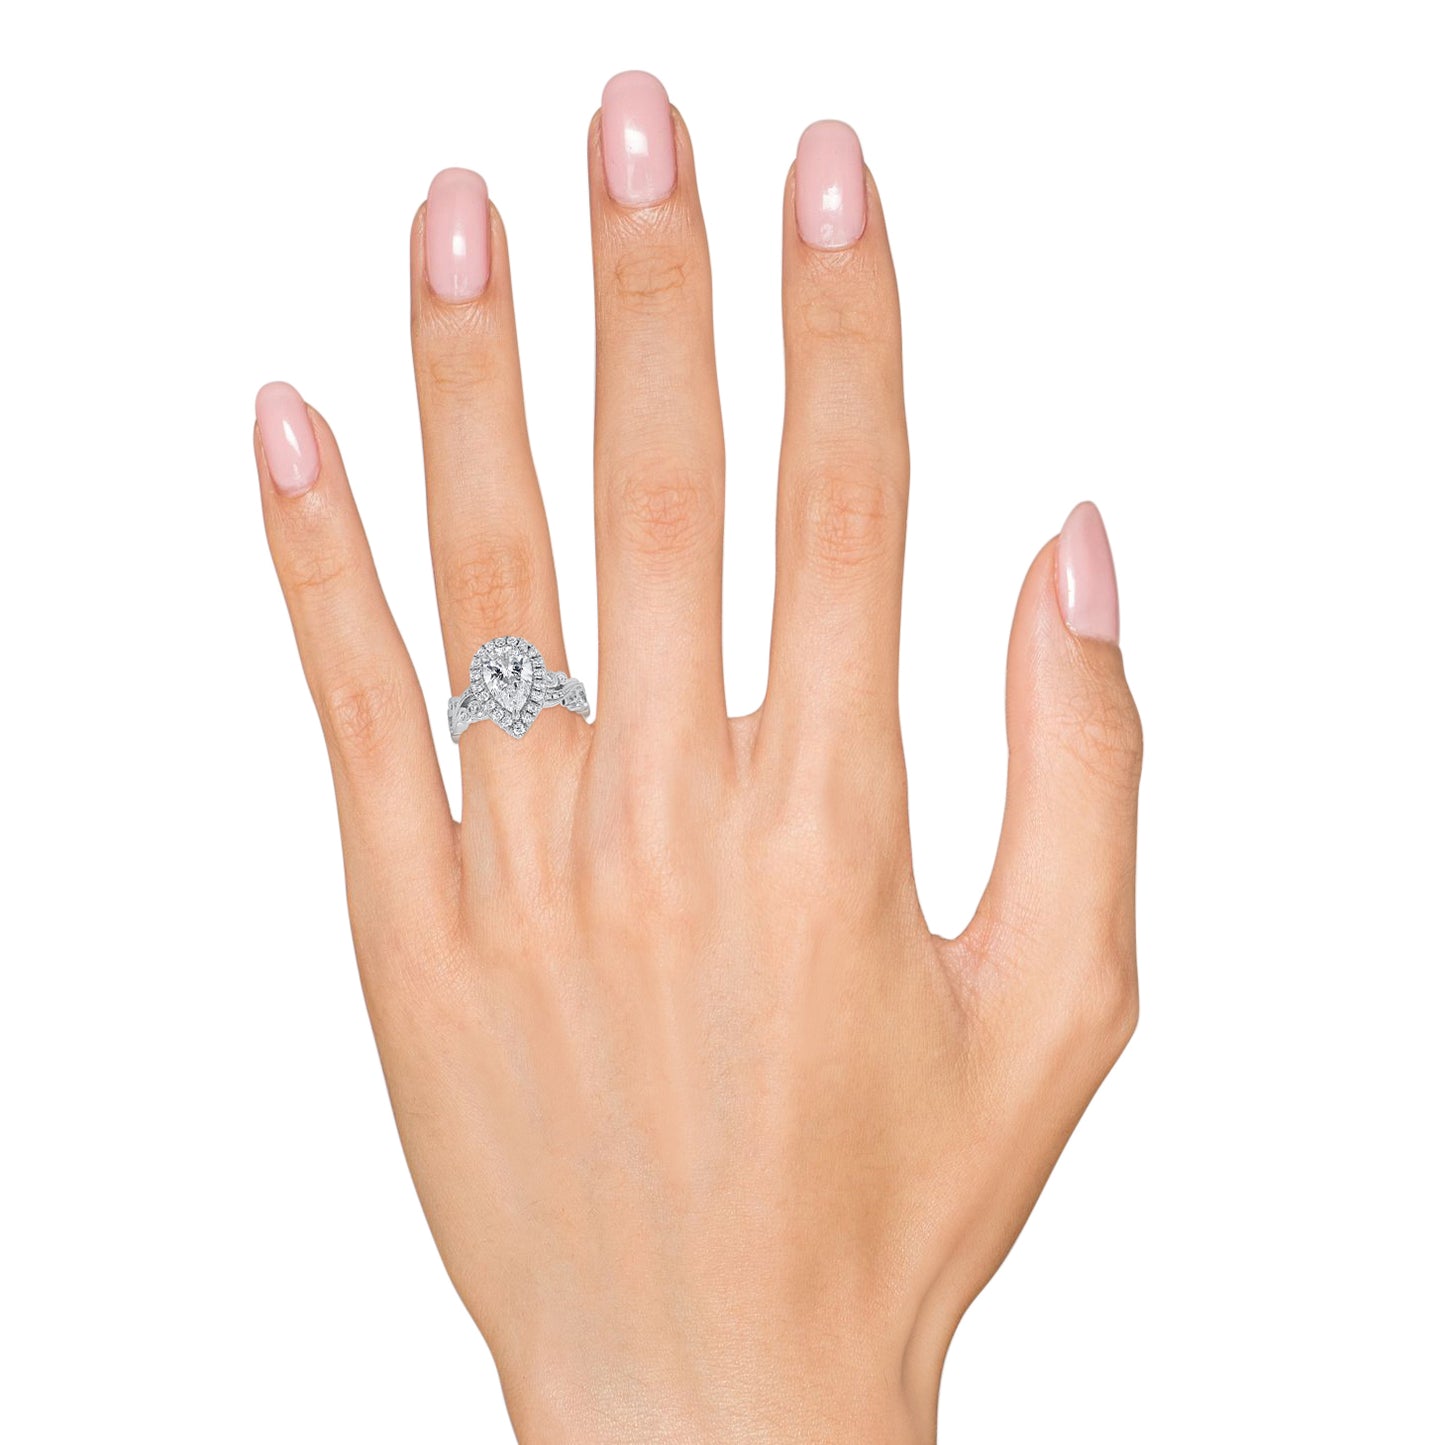 Whimsical Swirl Halo Diamond Engagement Ring